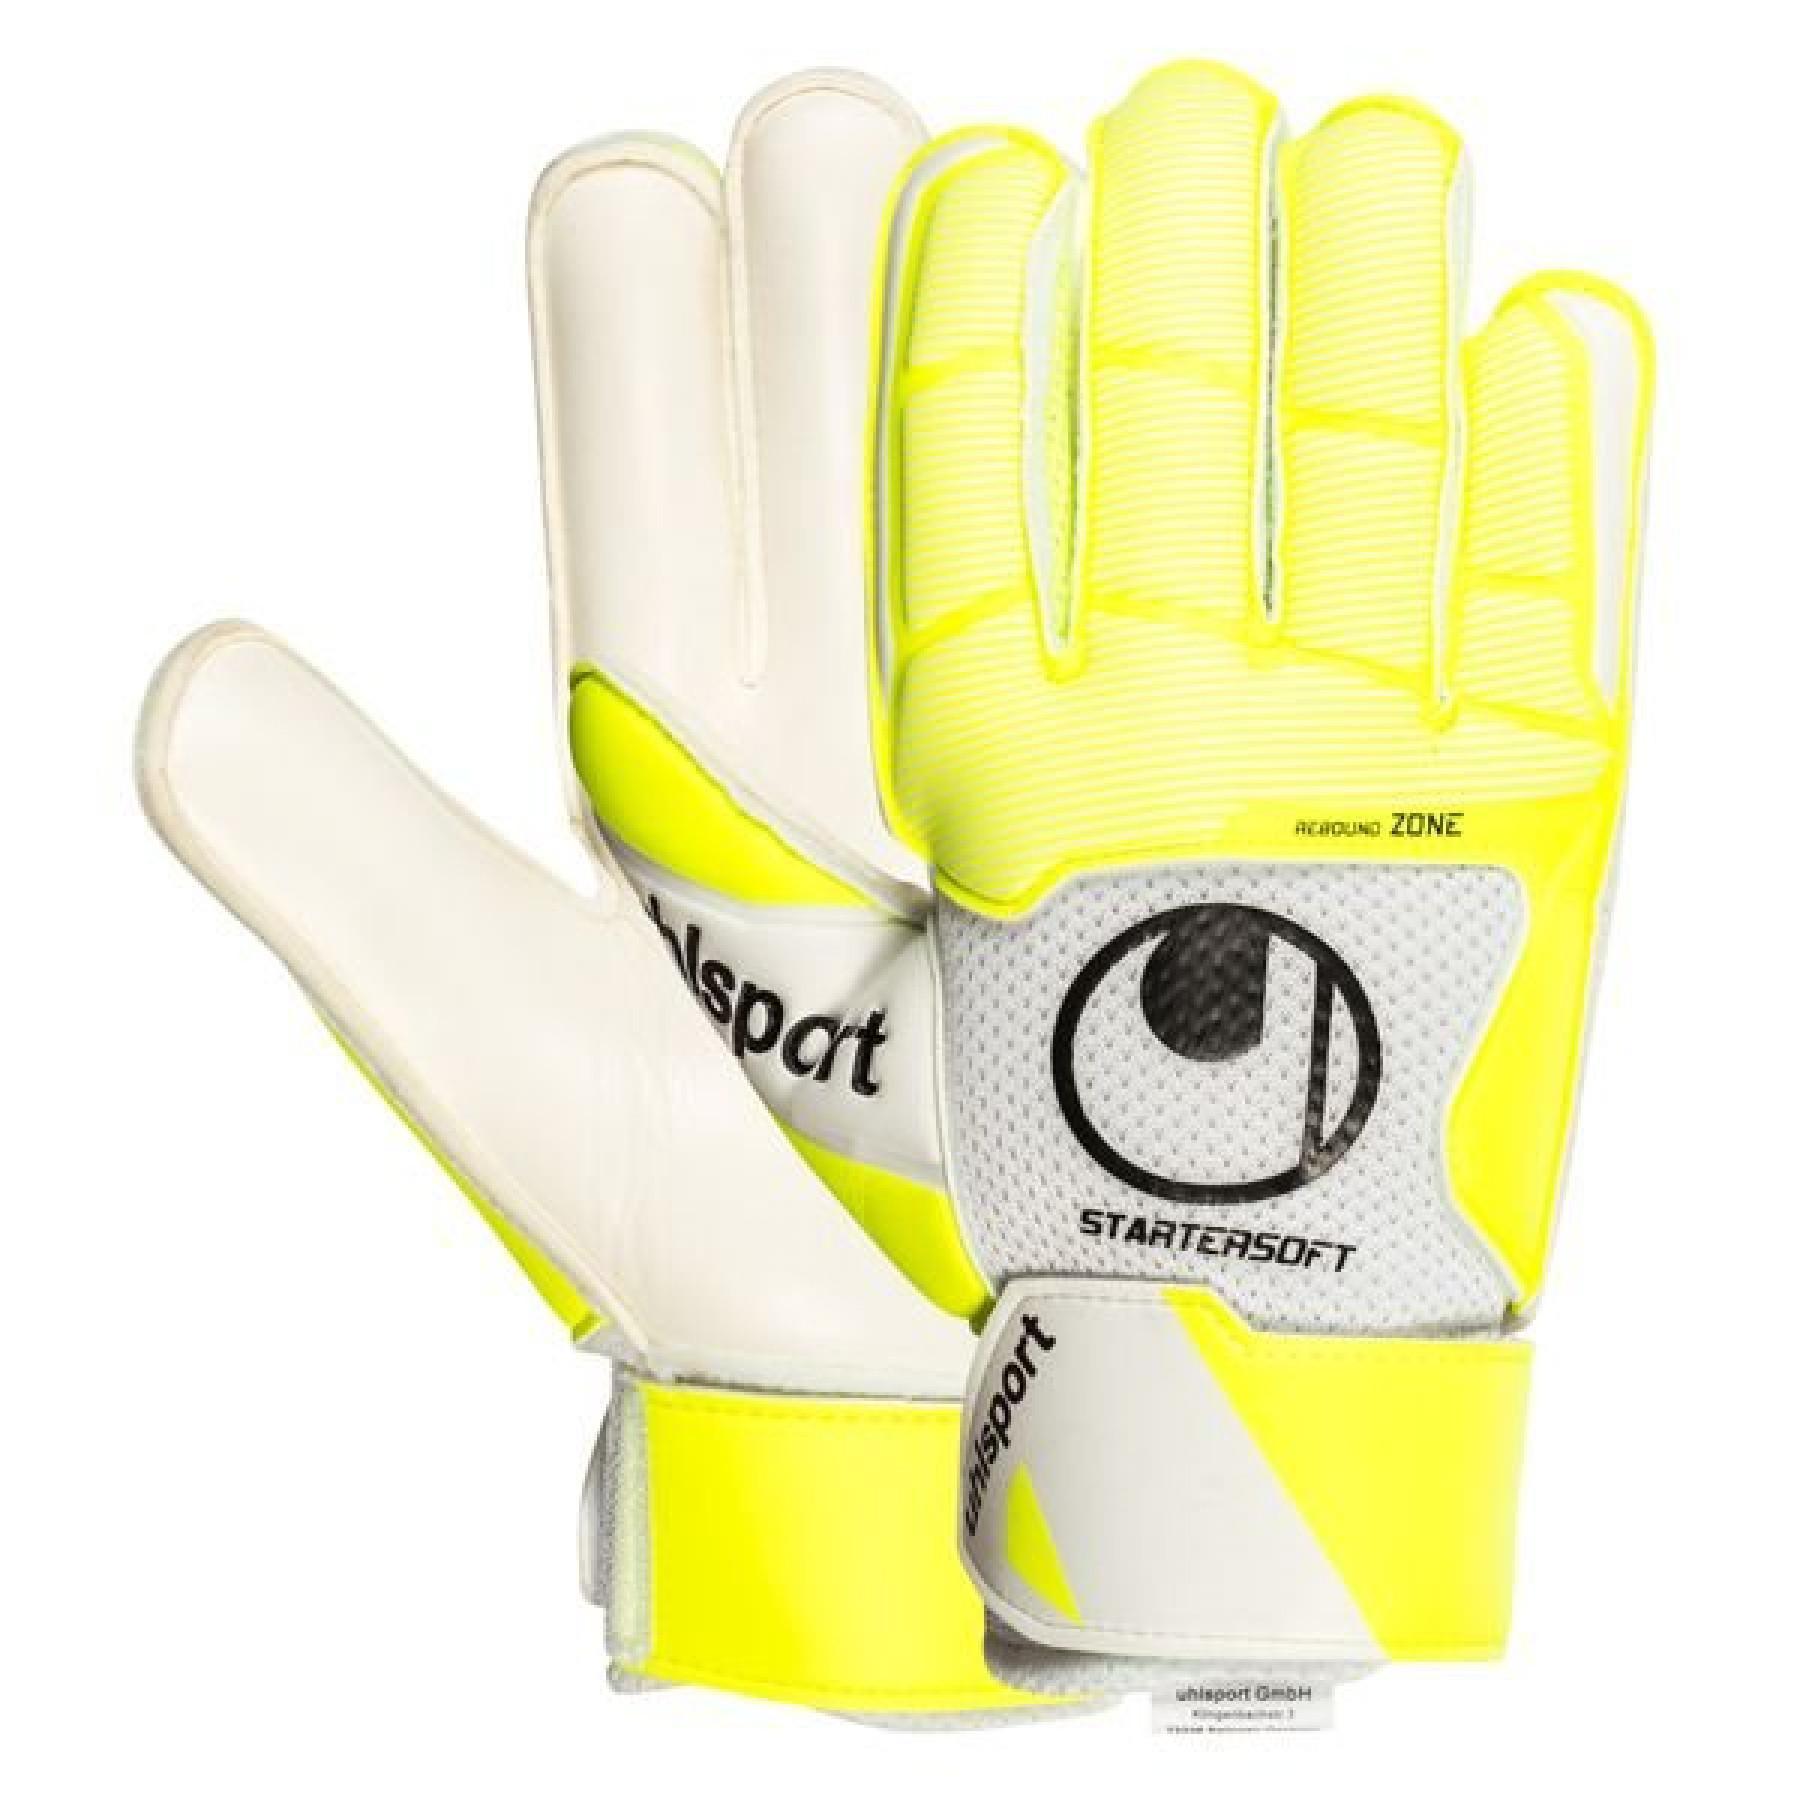 Goalkeeper gloves Uhlsport Pure Alliance Starter Soft